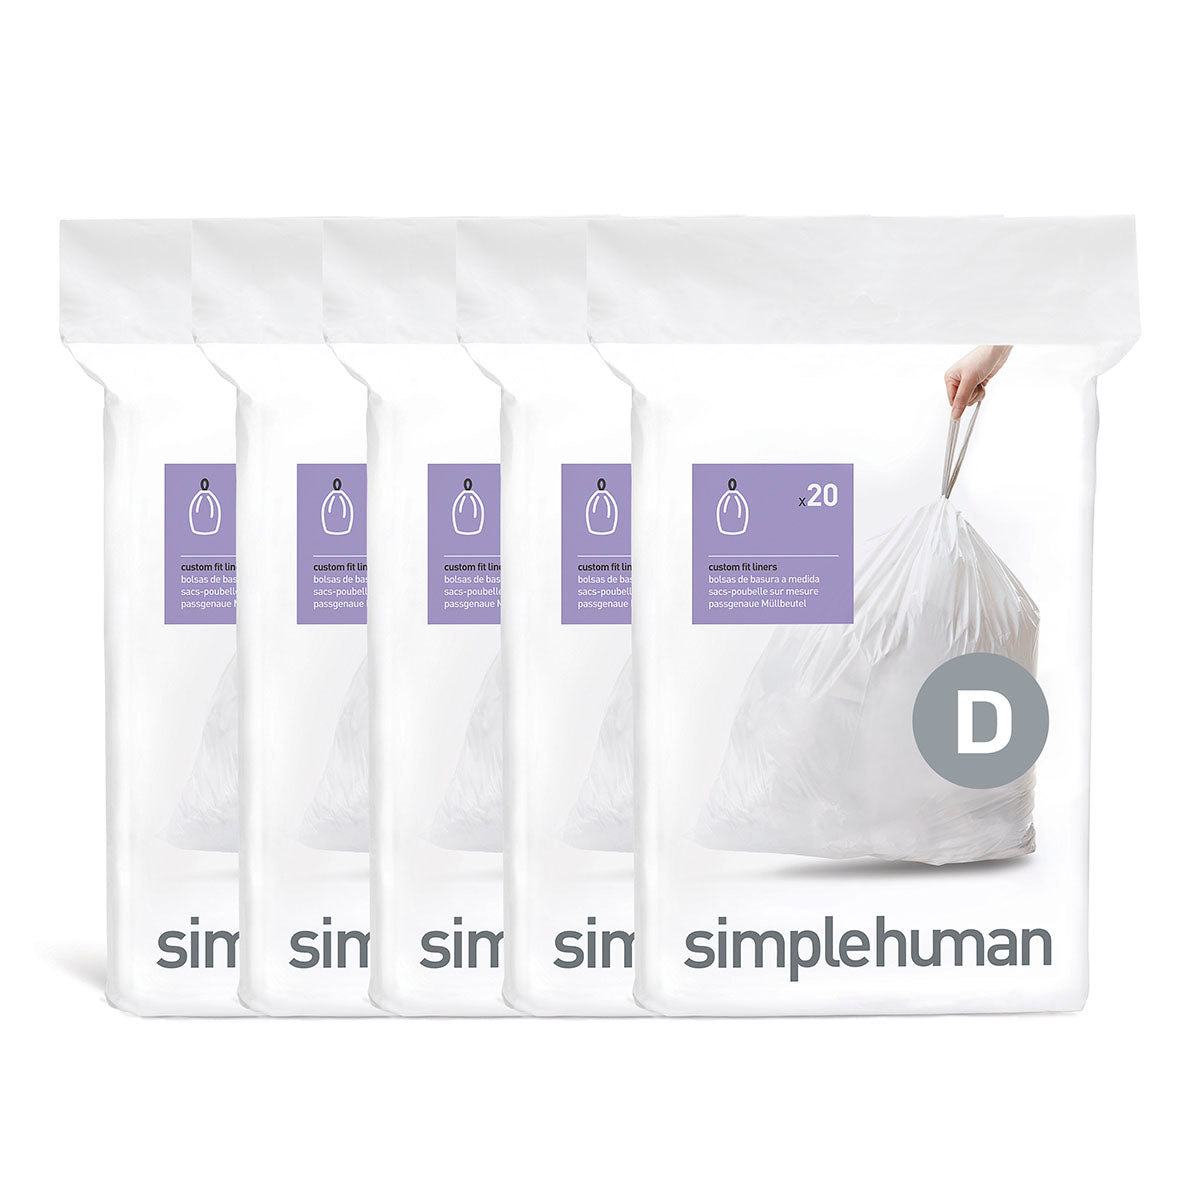 simplehuman custom fit liners - code D 240 pack